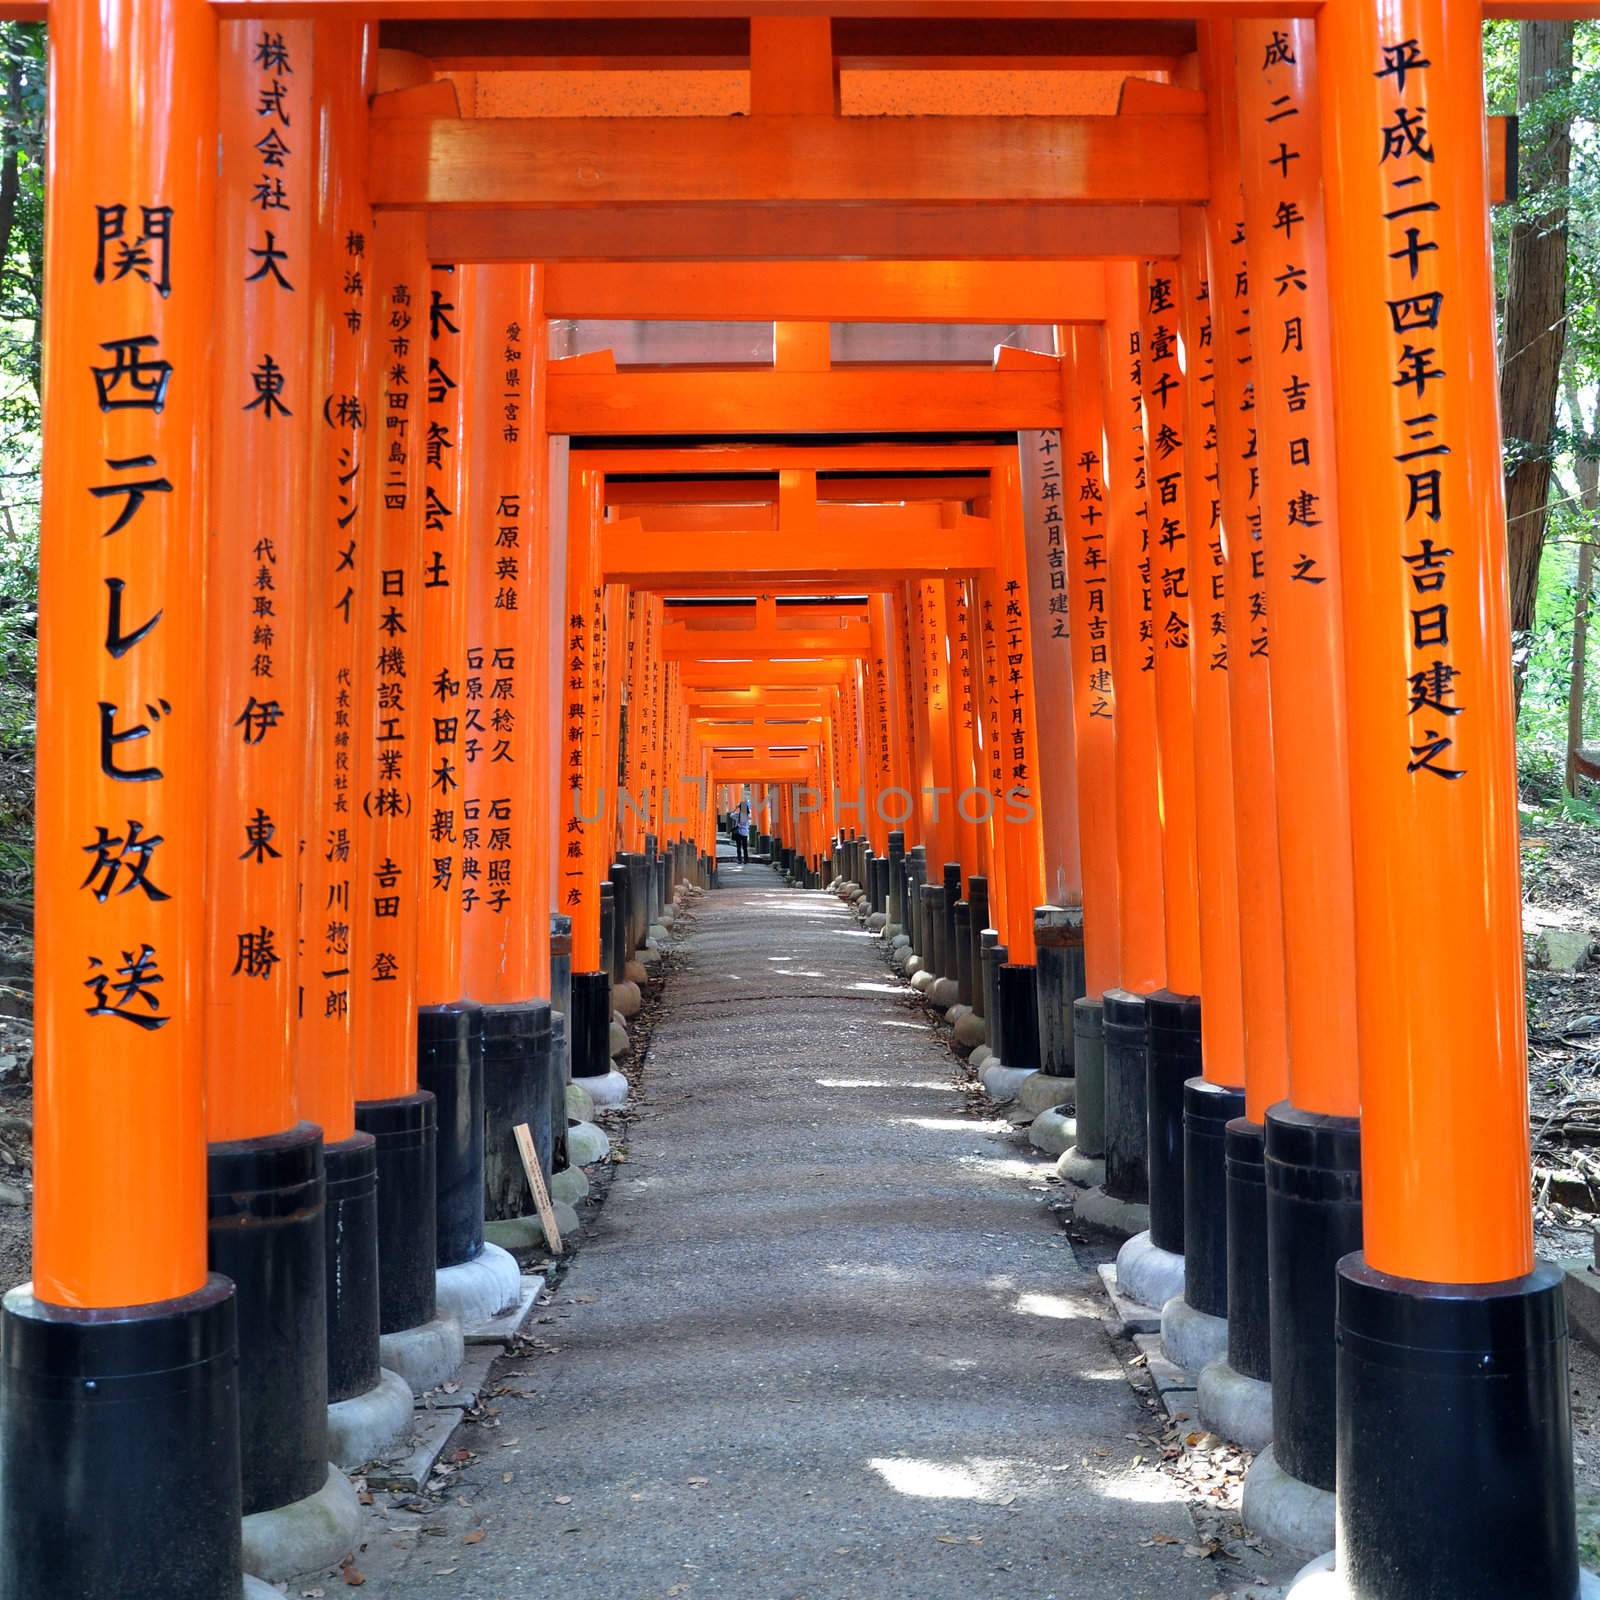 Fushimi Inari Taisha Shrine in Kyoto, Japan  by siraanamwong